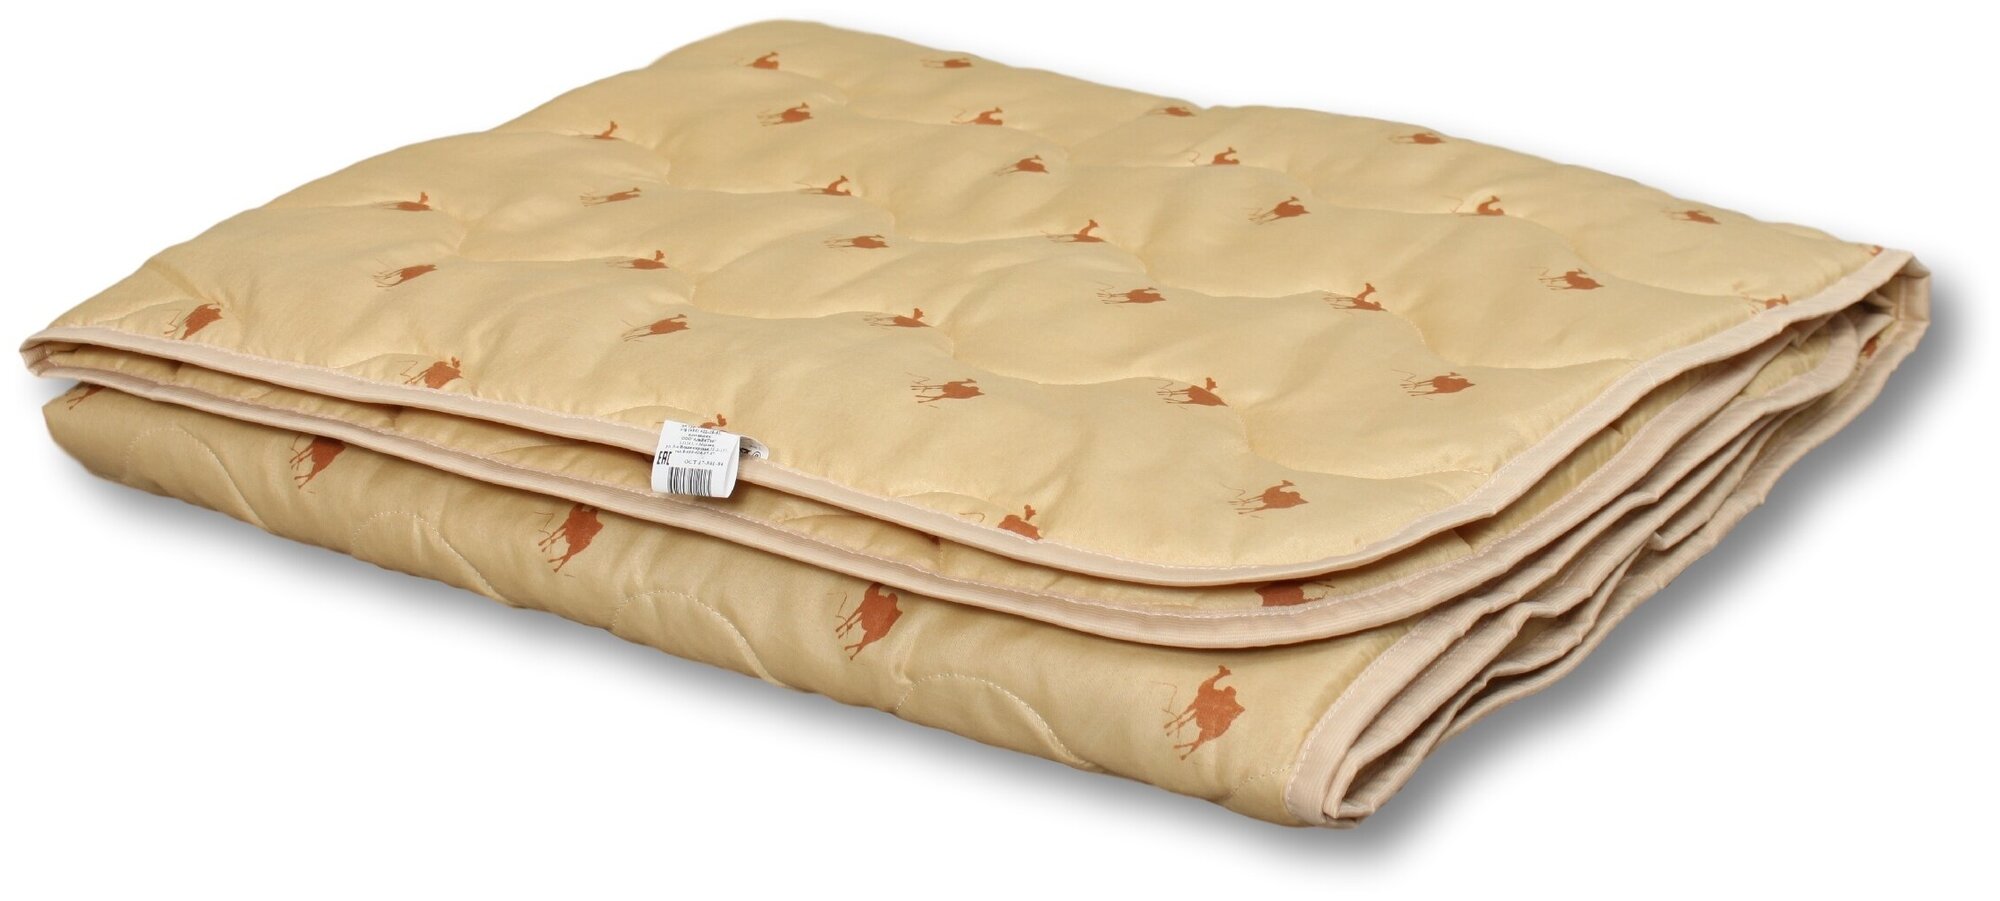 Одеяло AlViTek Camel, легкое, 200 x 220 см, светло-коричневый